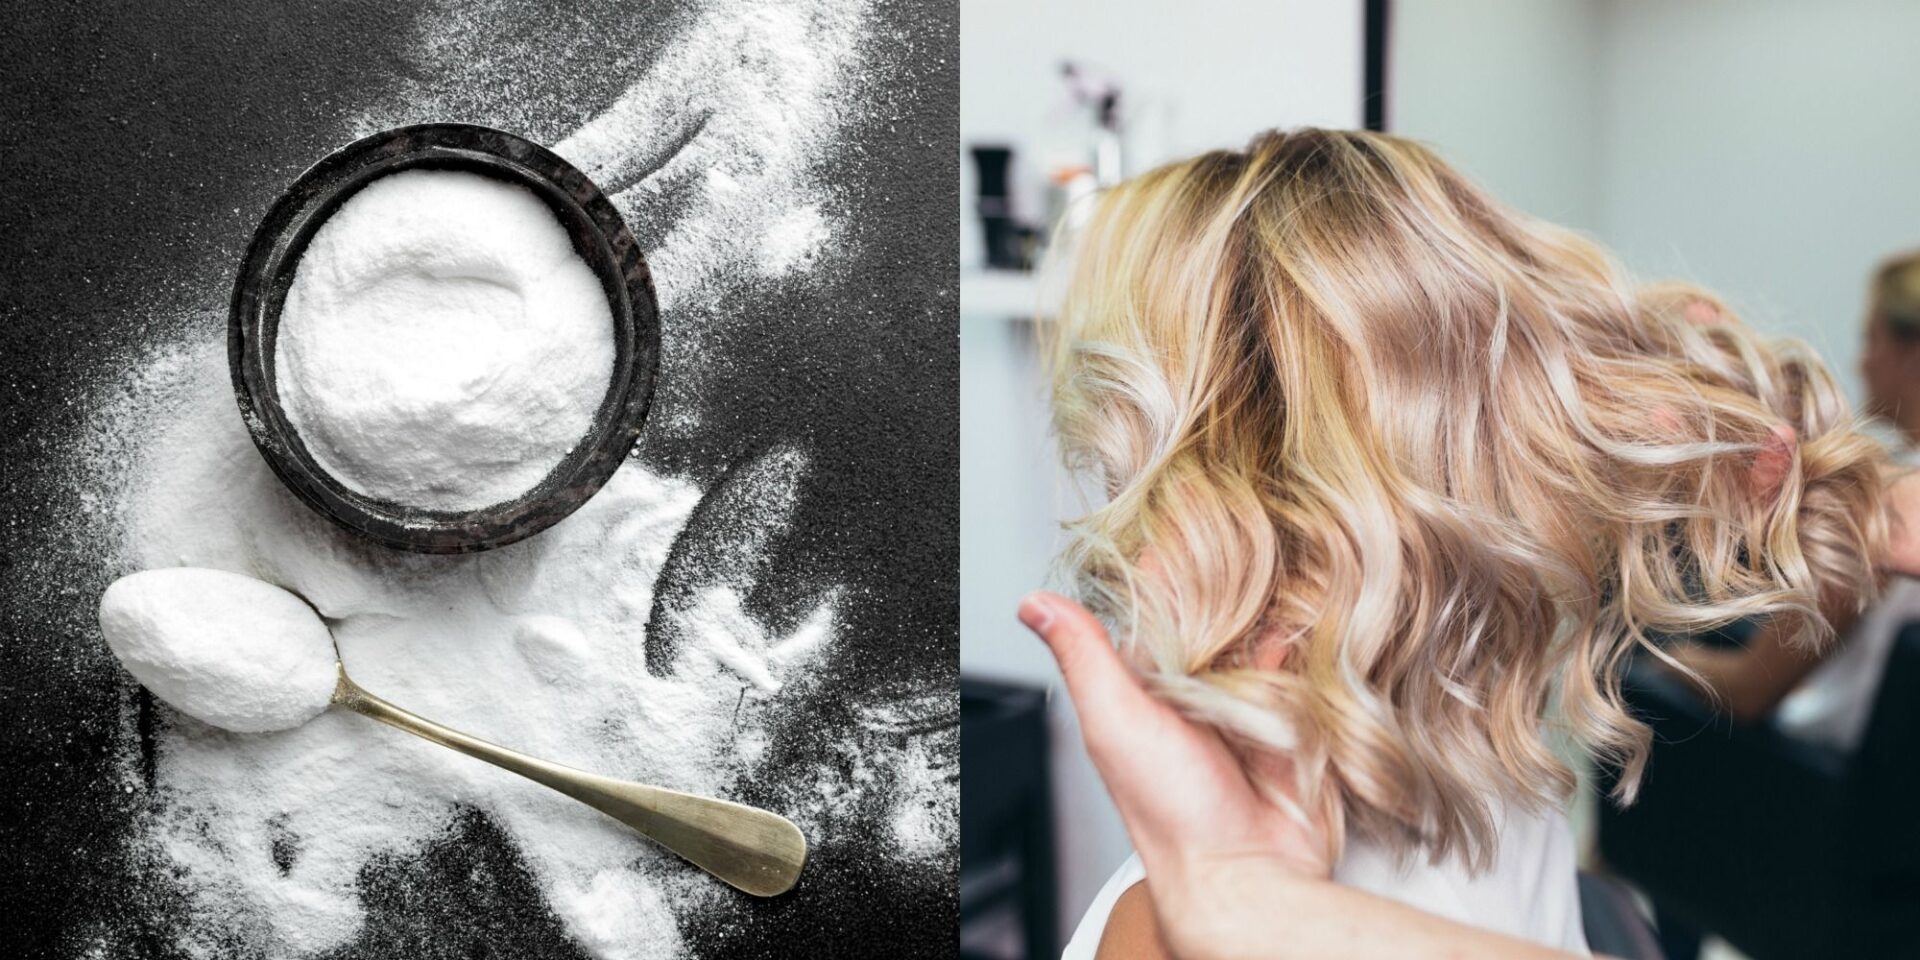 Get Shiny, Healthy Hair with Baking Soda